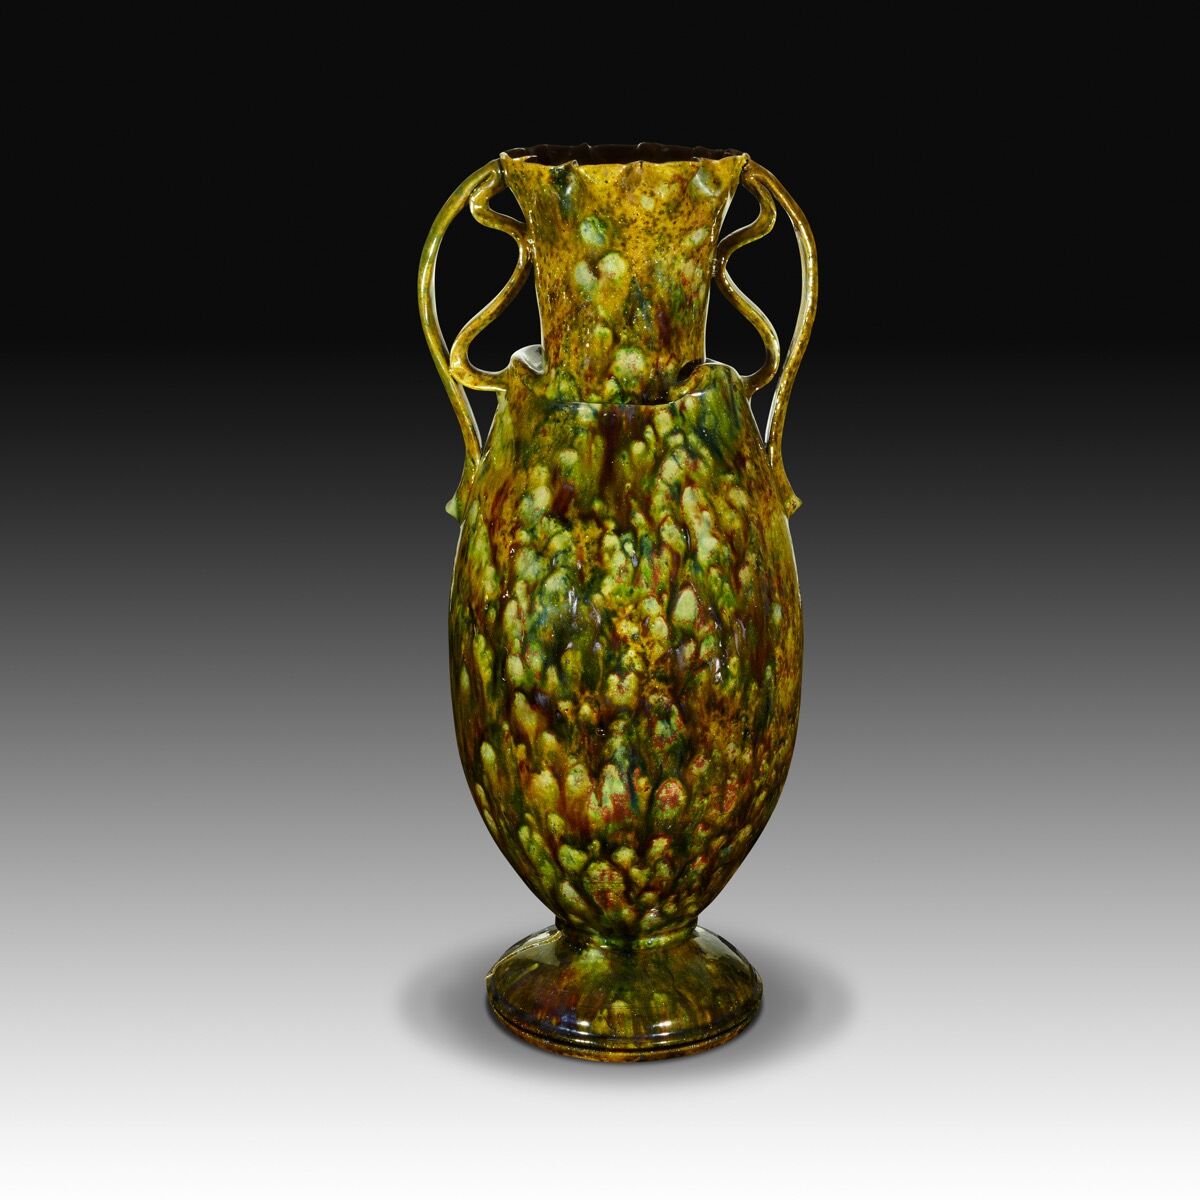 George Ohr The Eccentric Artist Who Pioneered American Ceramics Artsy